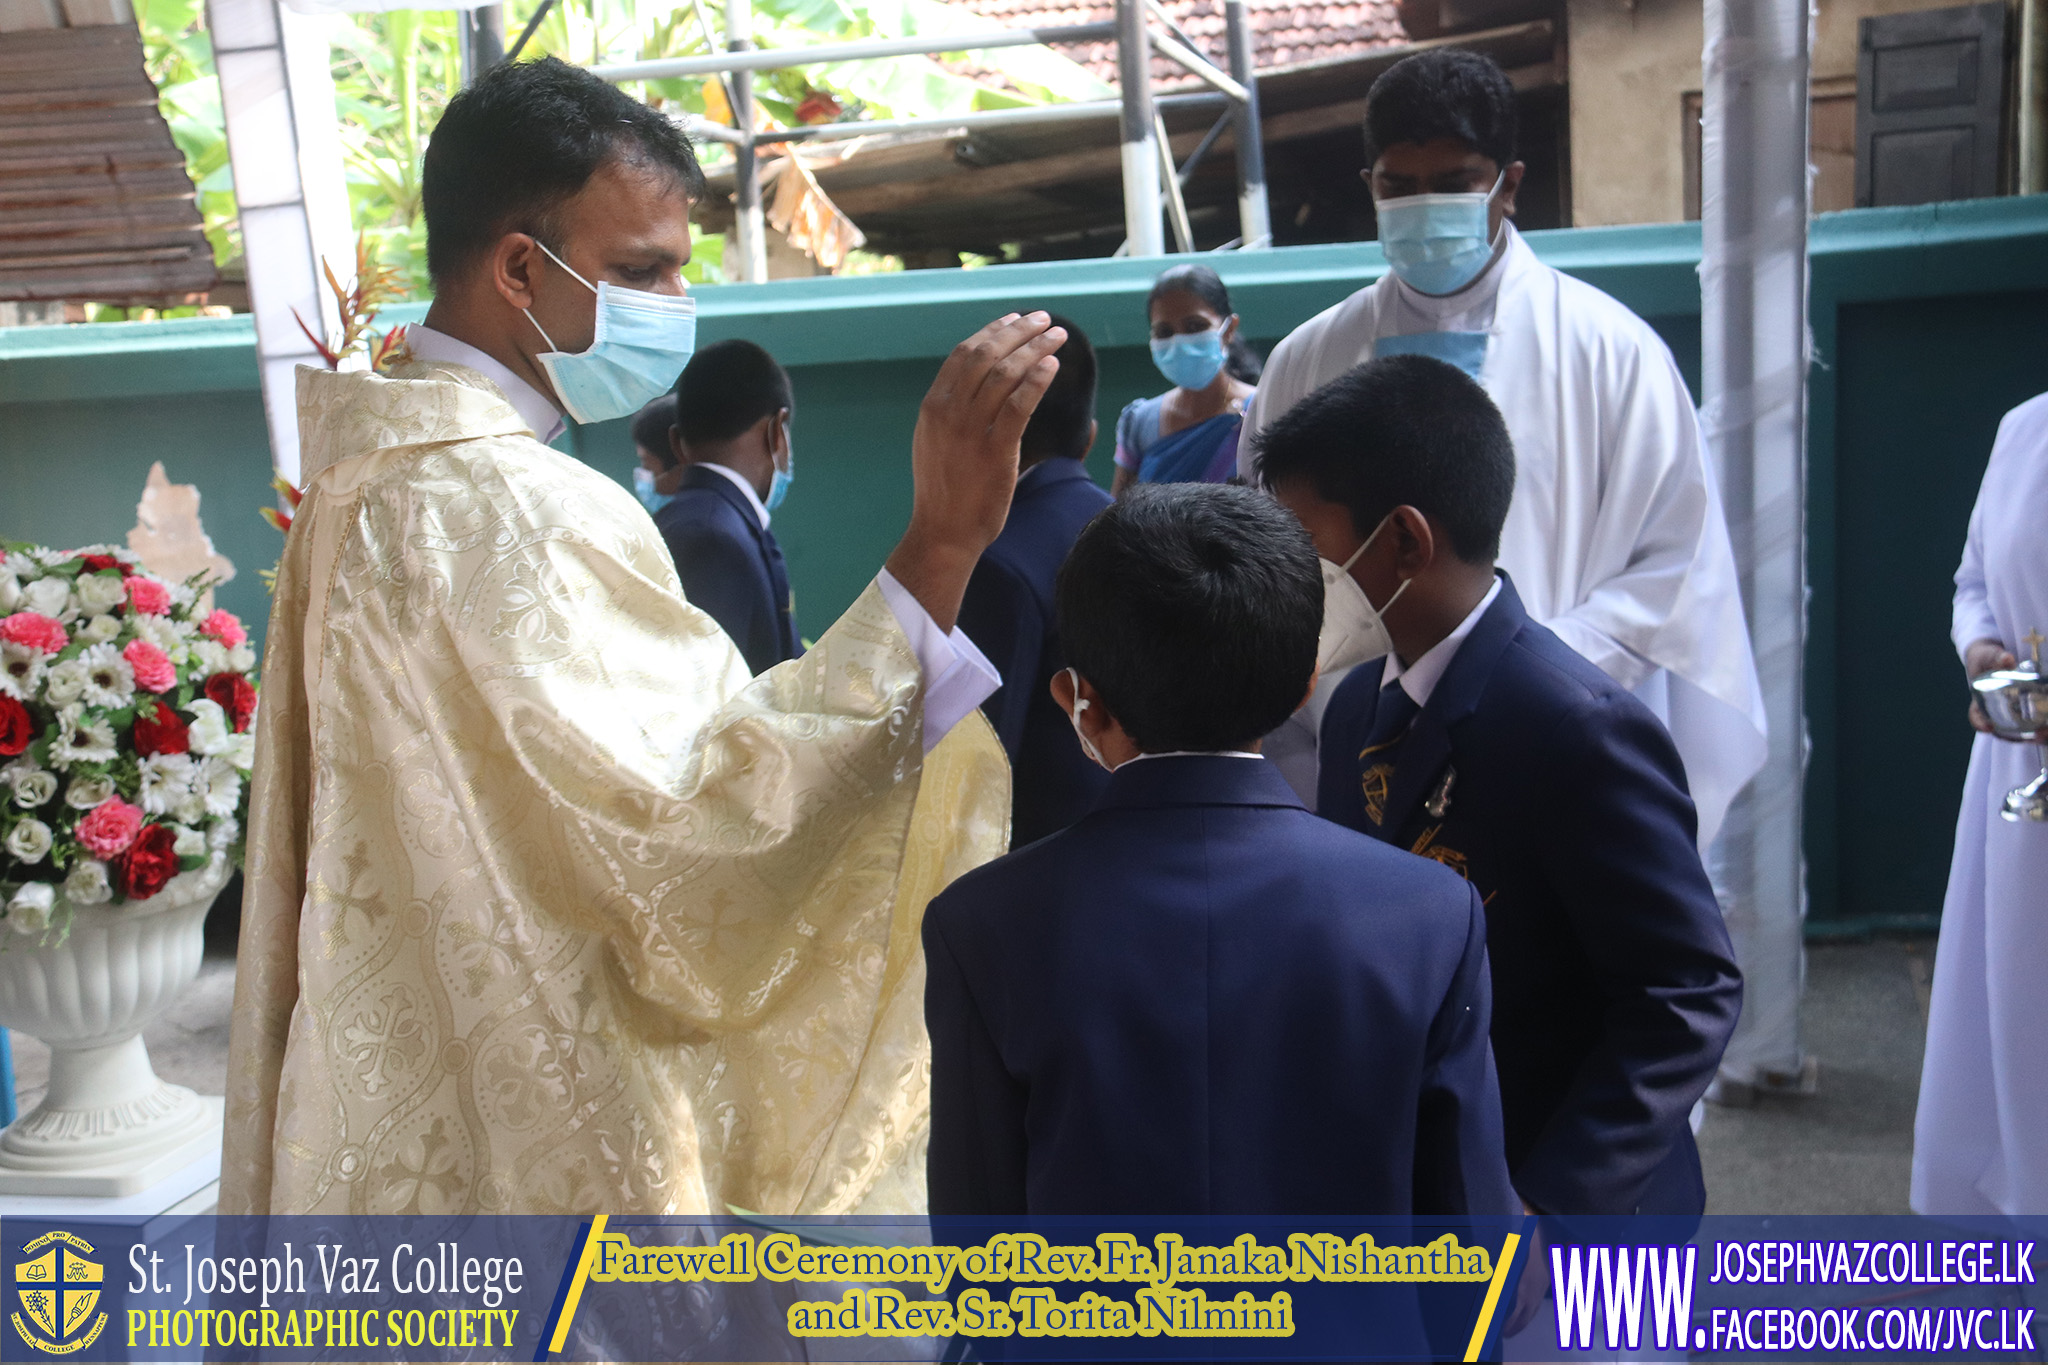 Farewell Ceremony Of Rev. Fr. Janaka Nishantha And Rev. Sr. Torita Nilmini - St. Joseph Vaz College - Wennappuwa - Sri Lanka